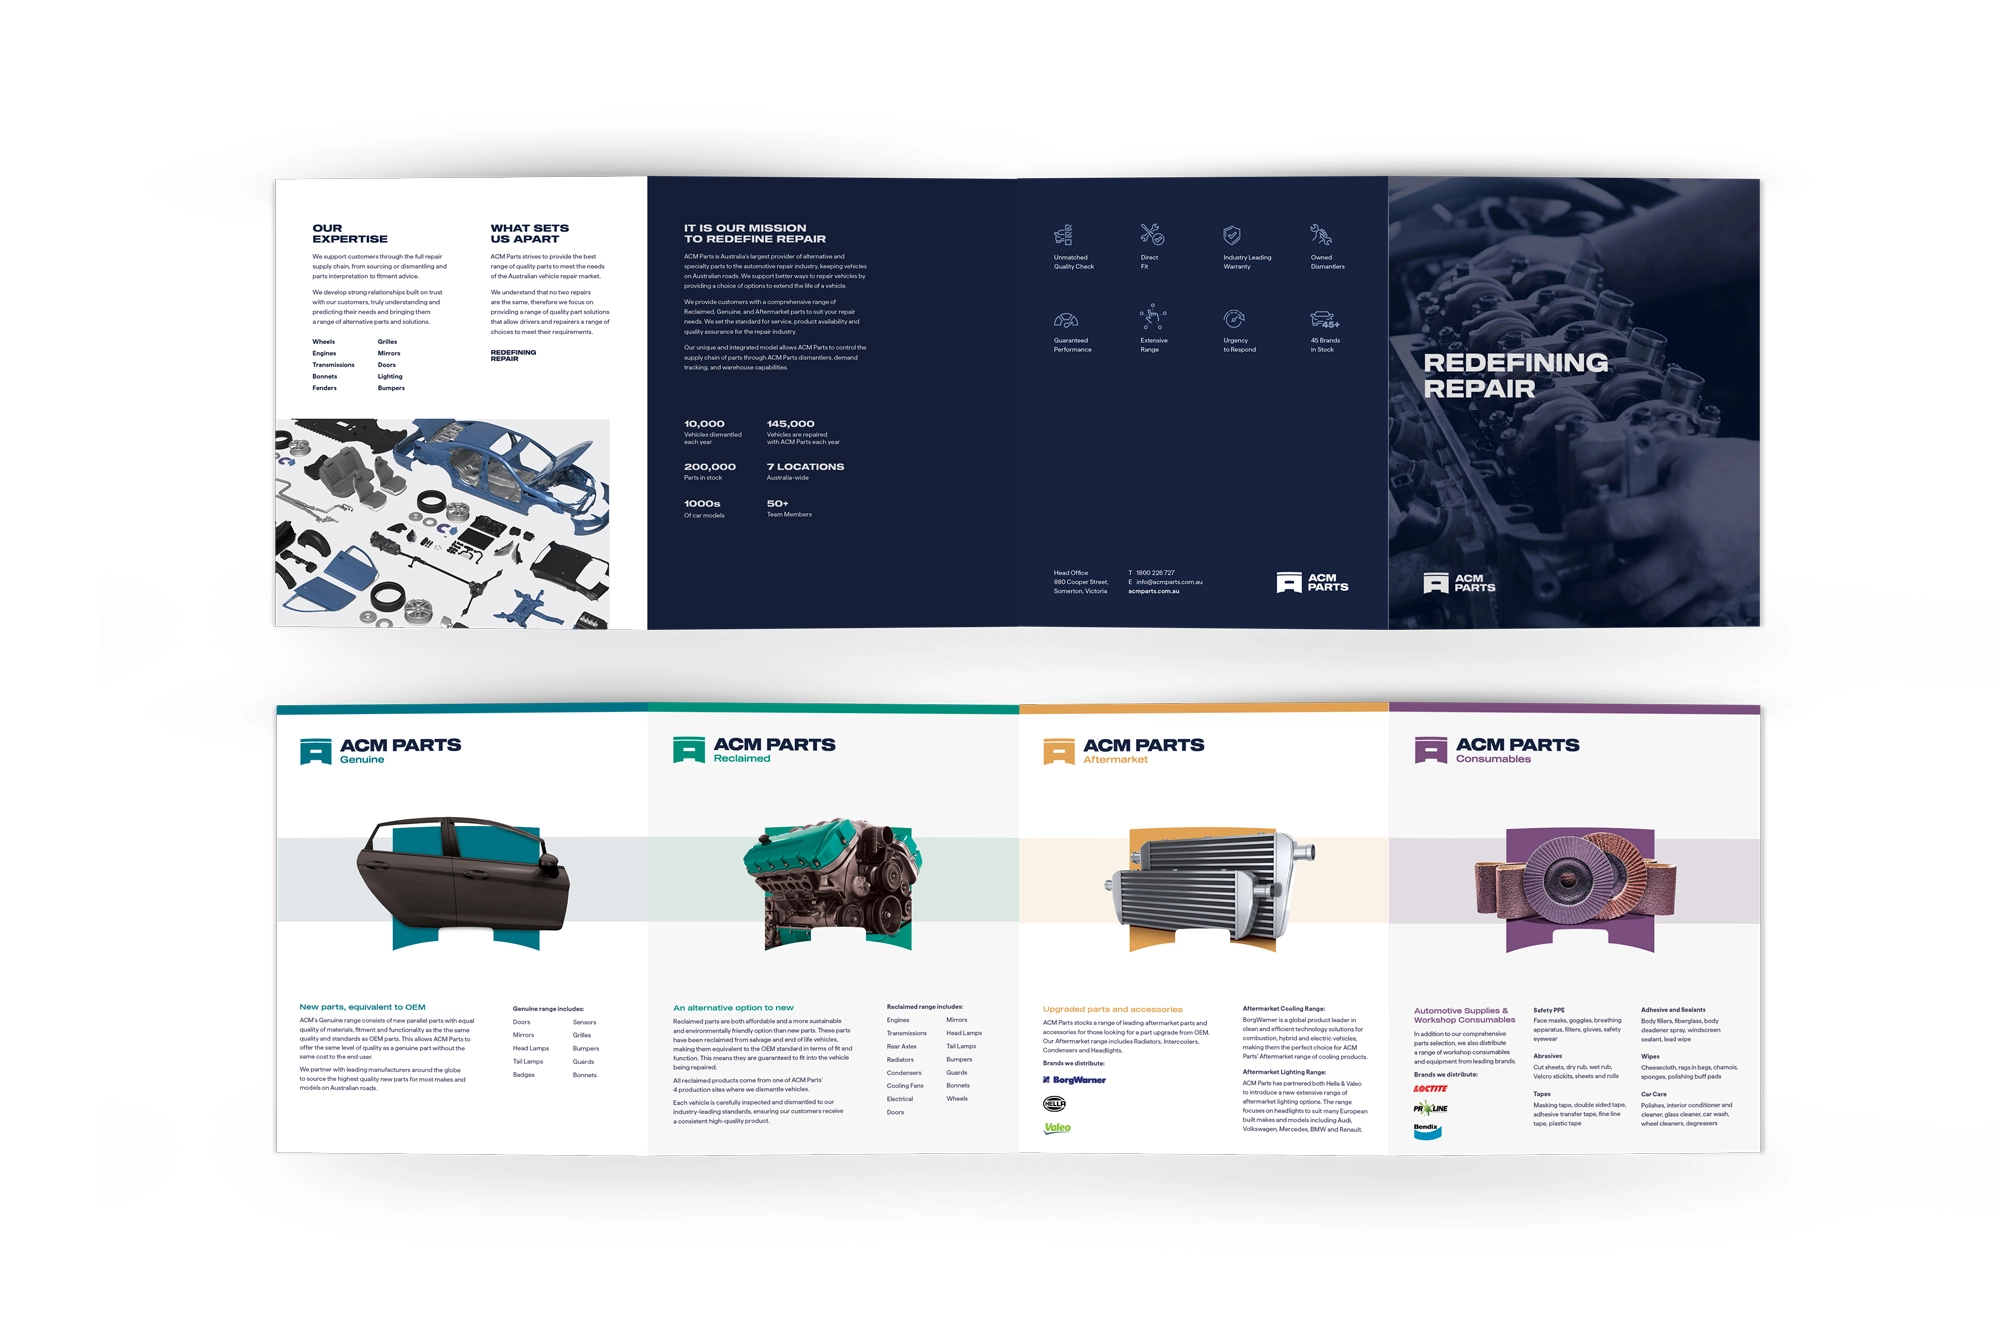 ACM Parts brochure design by Kaliber Studio